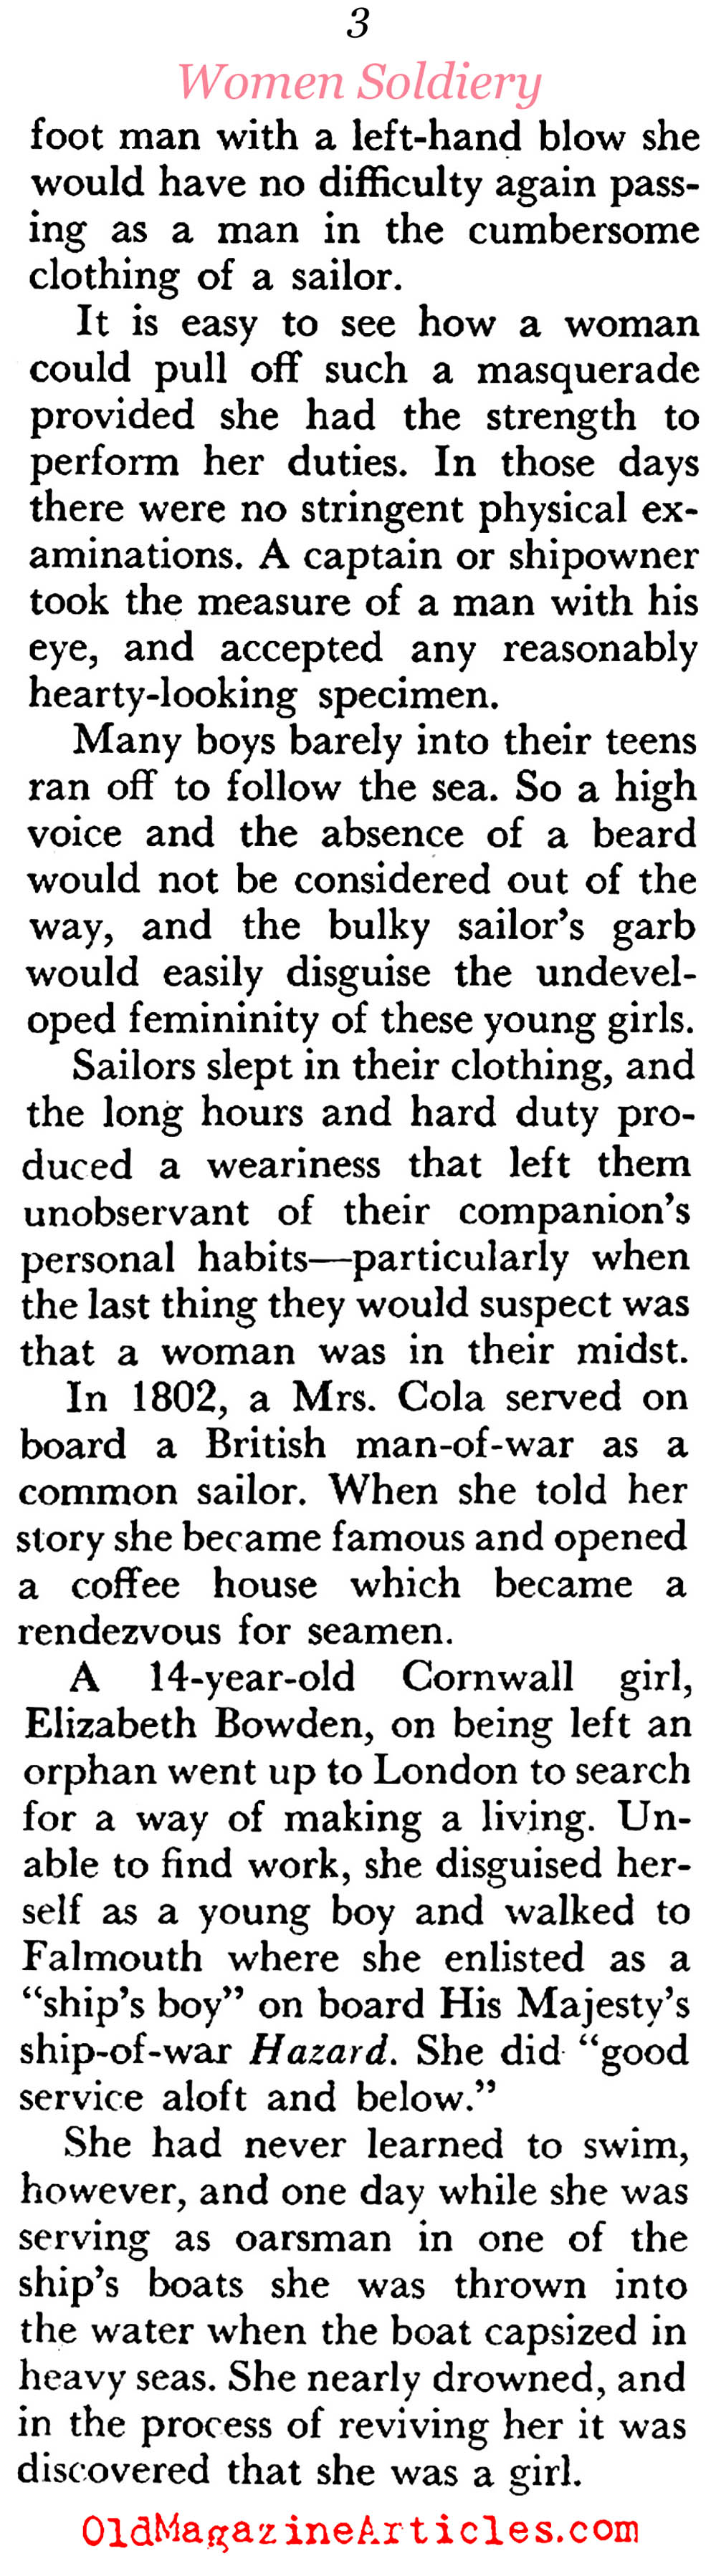 A Brief History of Women Combatants (Coronet Magazine, 1957)